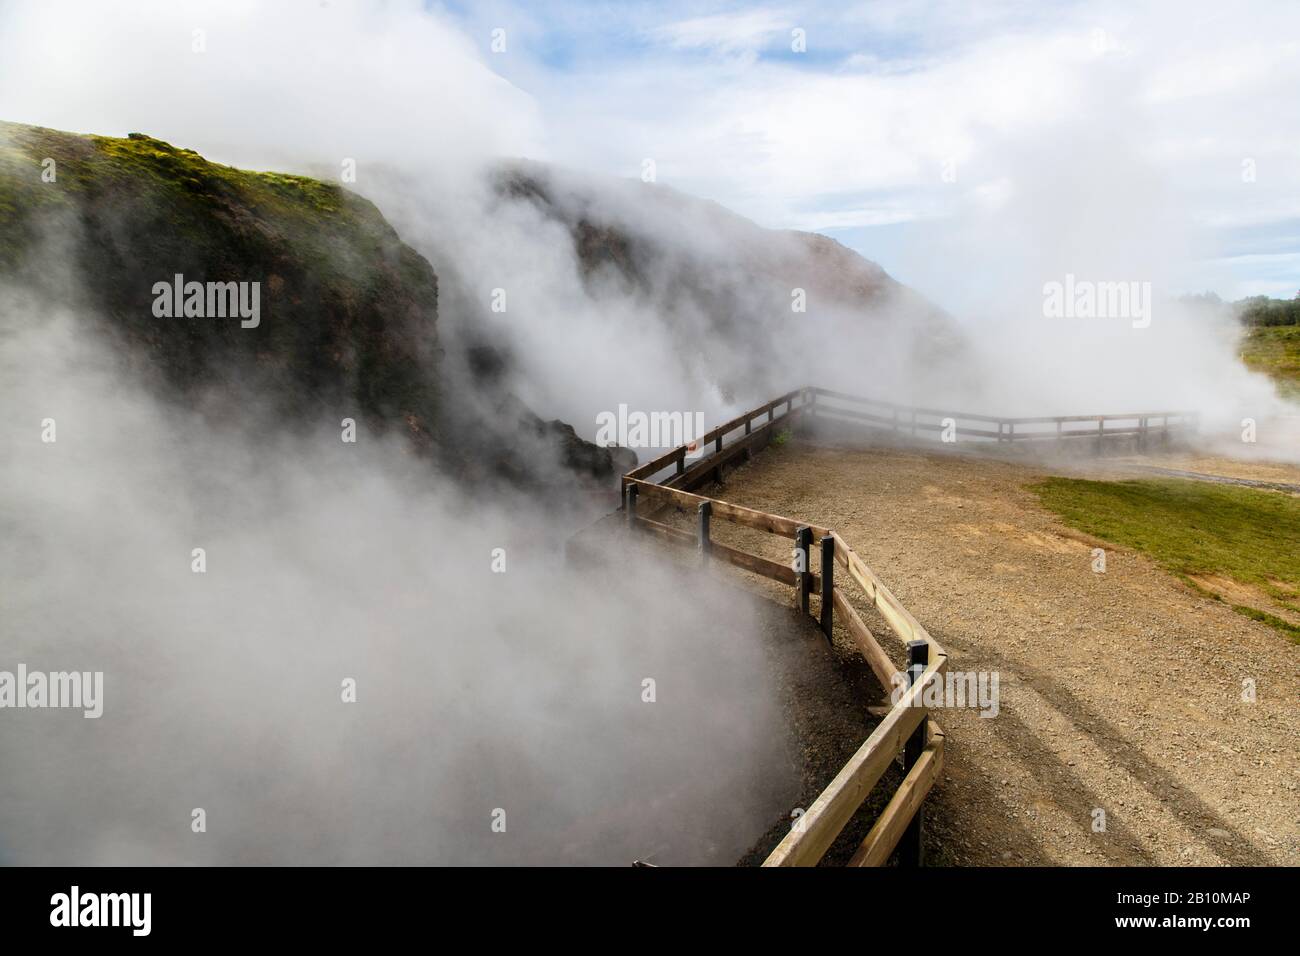 Deildartunguhver, hot springs in the Reykholtsdalur valley, Iceland Stock Photo